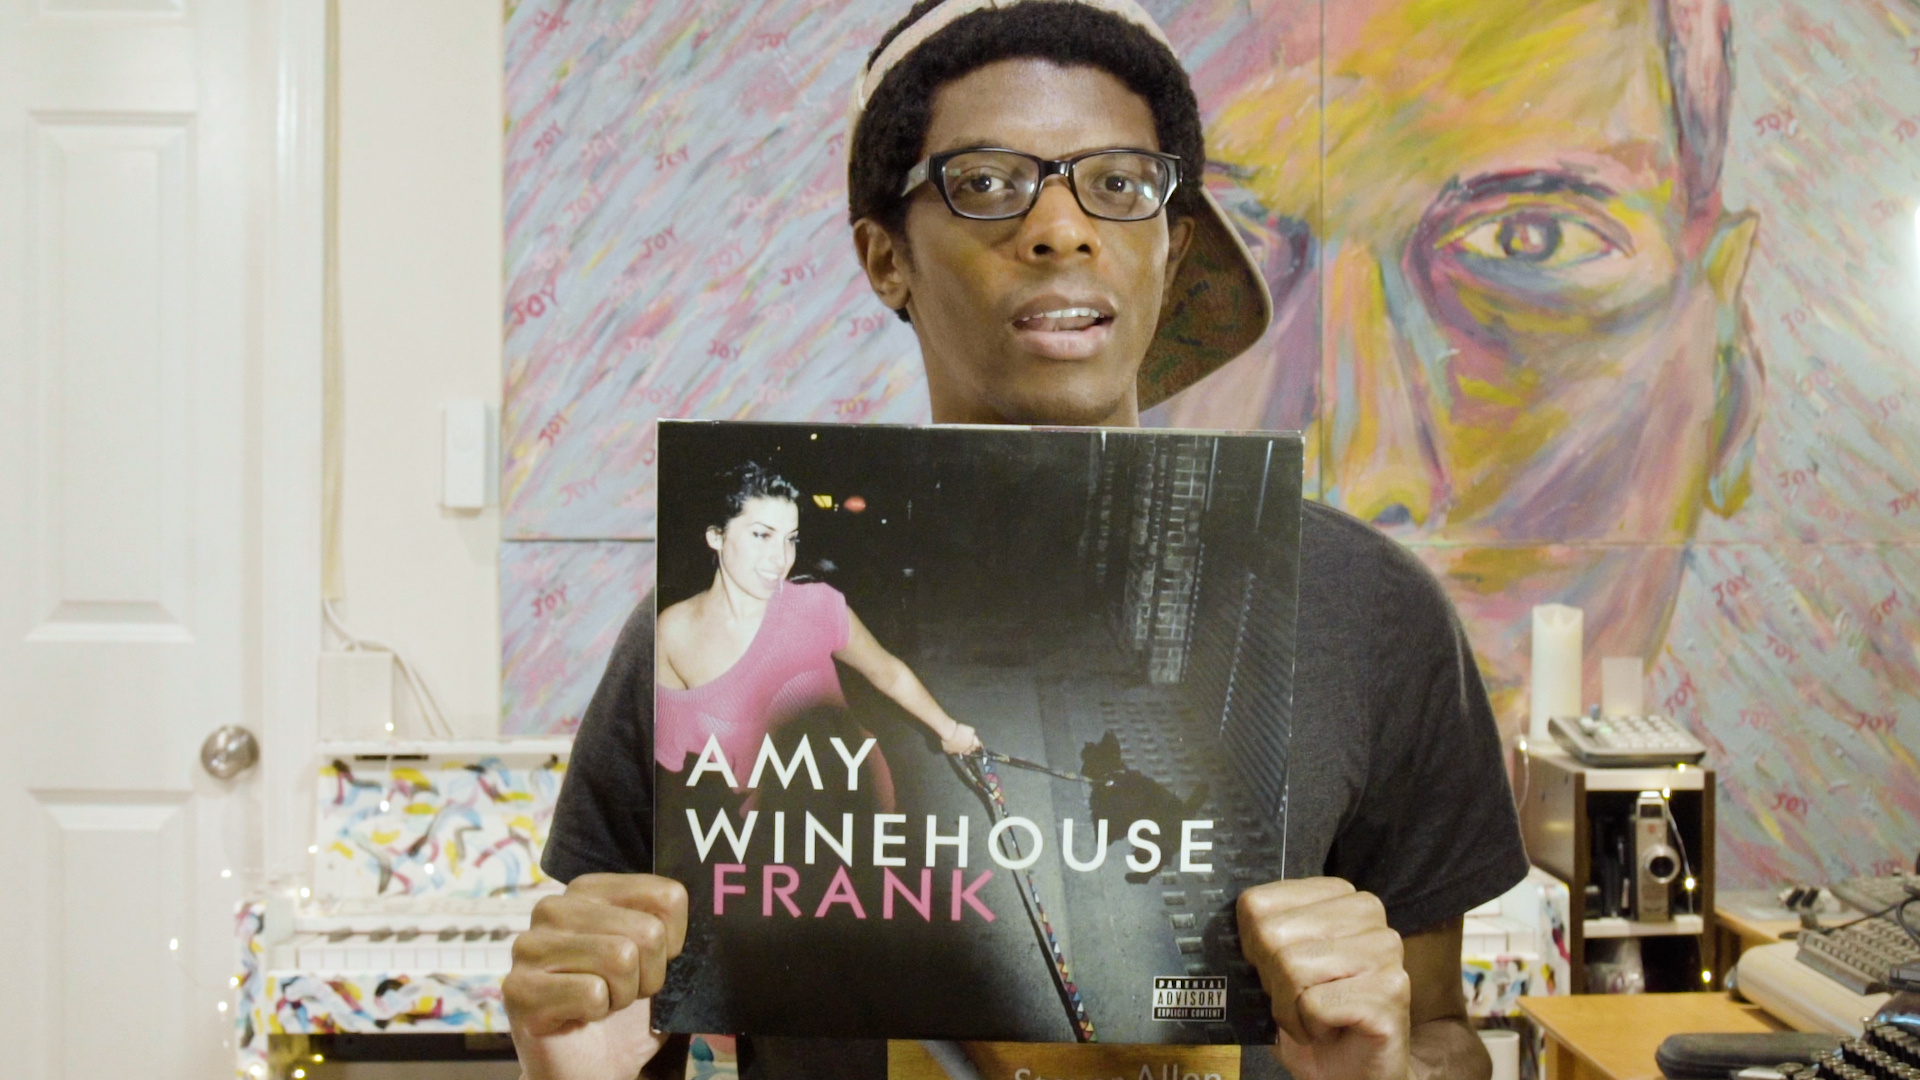 Amy Winehouse – Frank – Album – Vinyl Record – UNBOXING